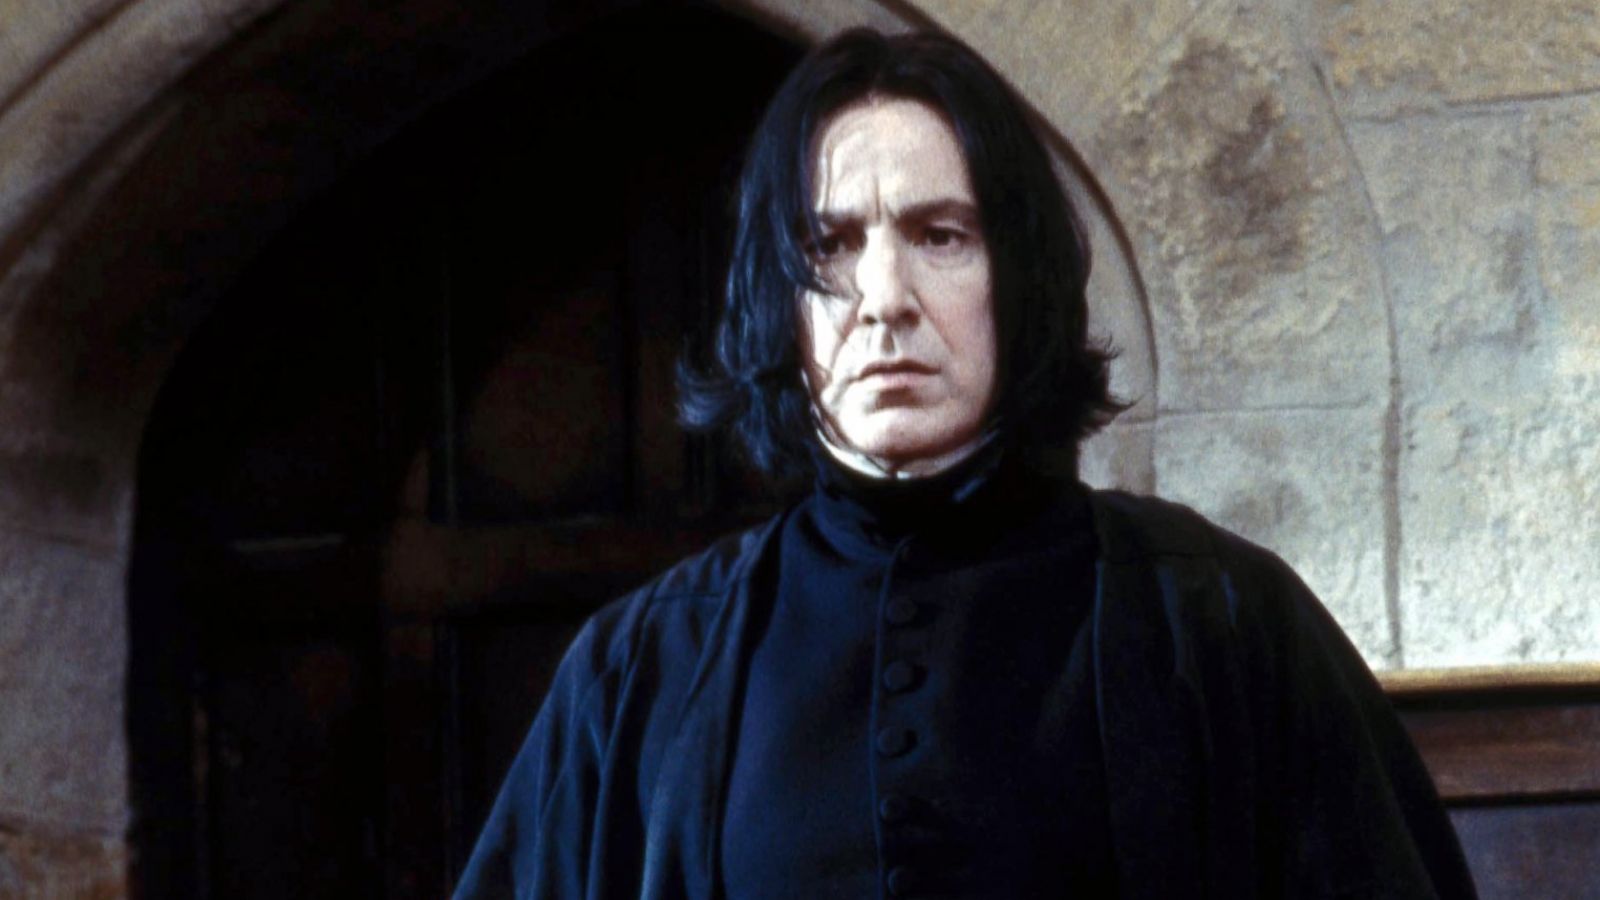 Alan Rickman, Snape in 'Harry Potter' films, dies at 69